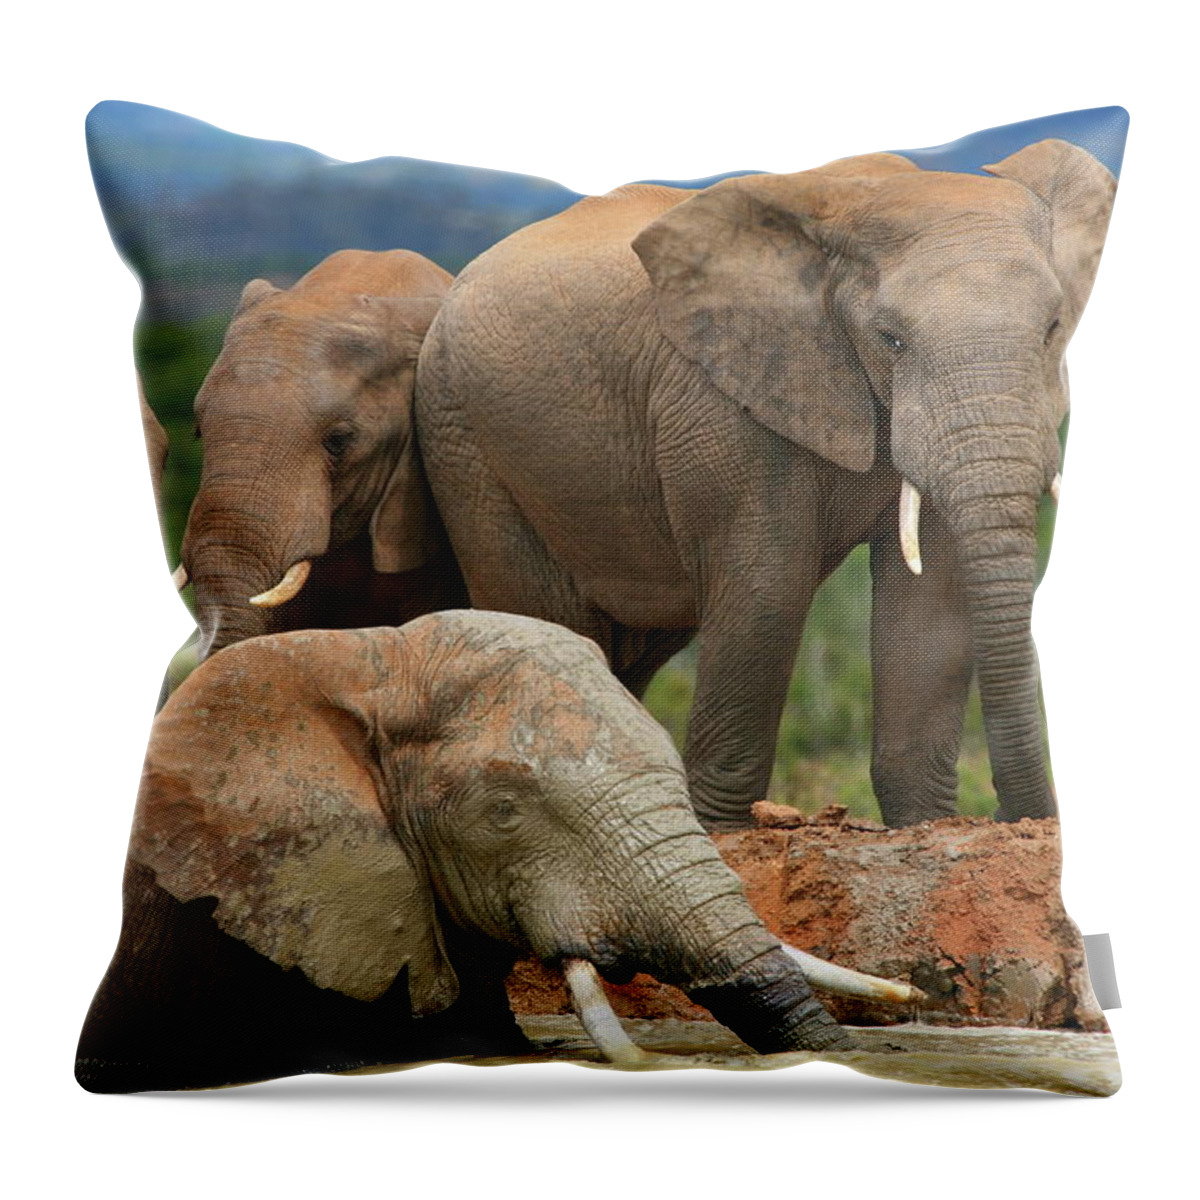 Elephant Throw Pillow featuring the photograph Elephant Bath by Bruce J Robinson